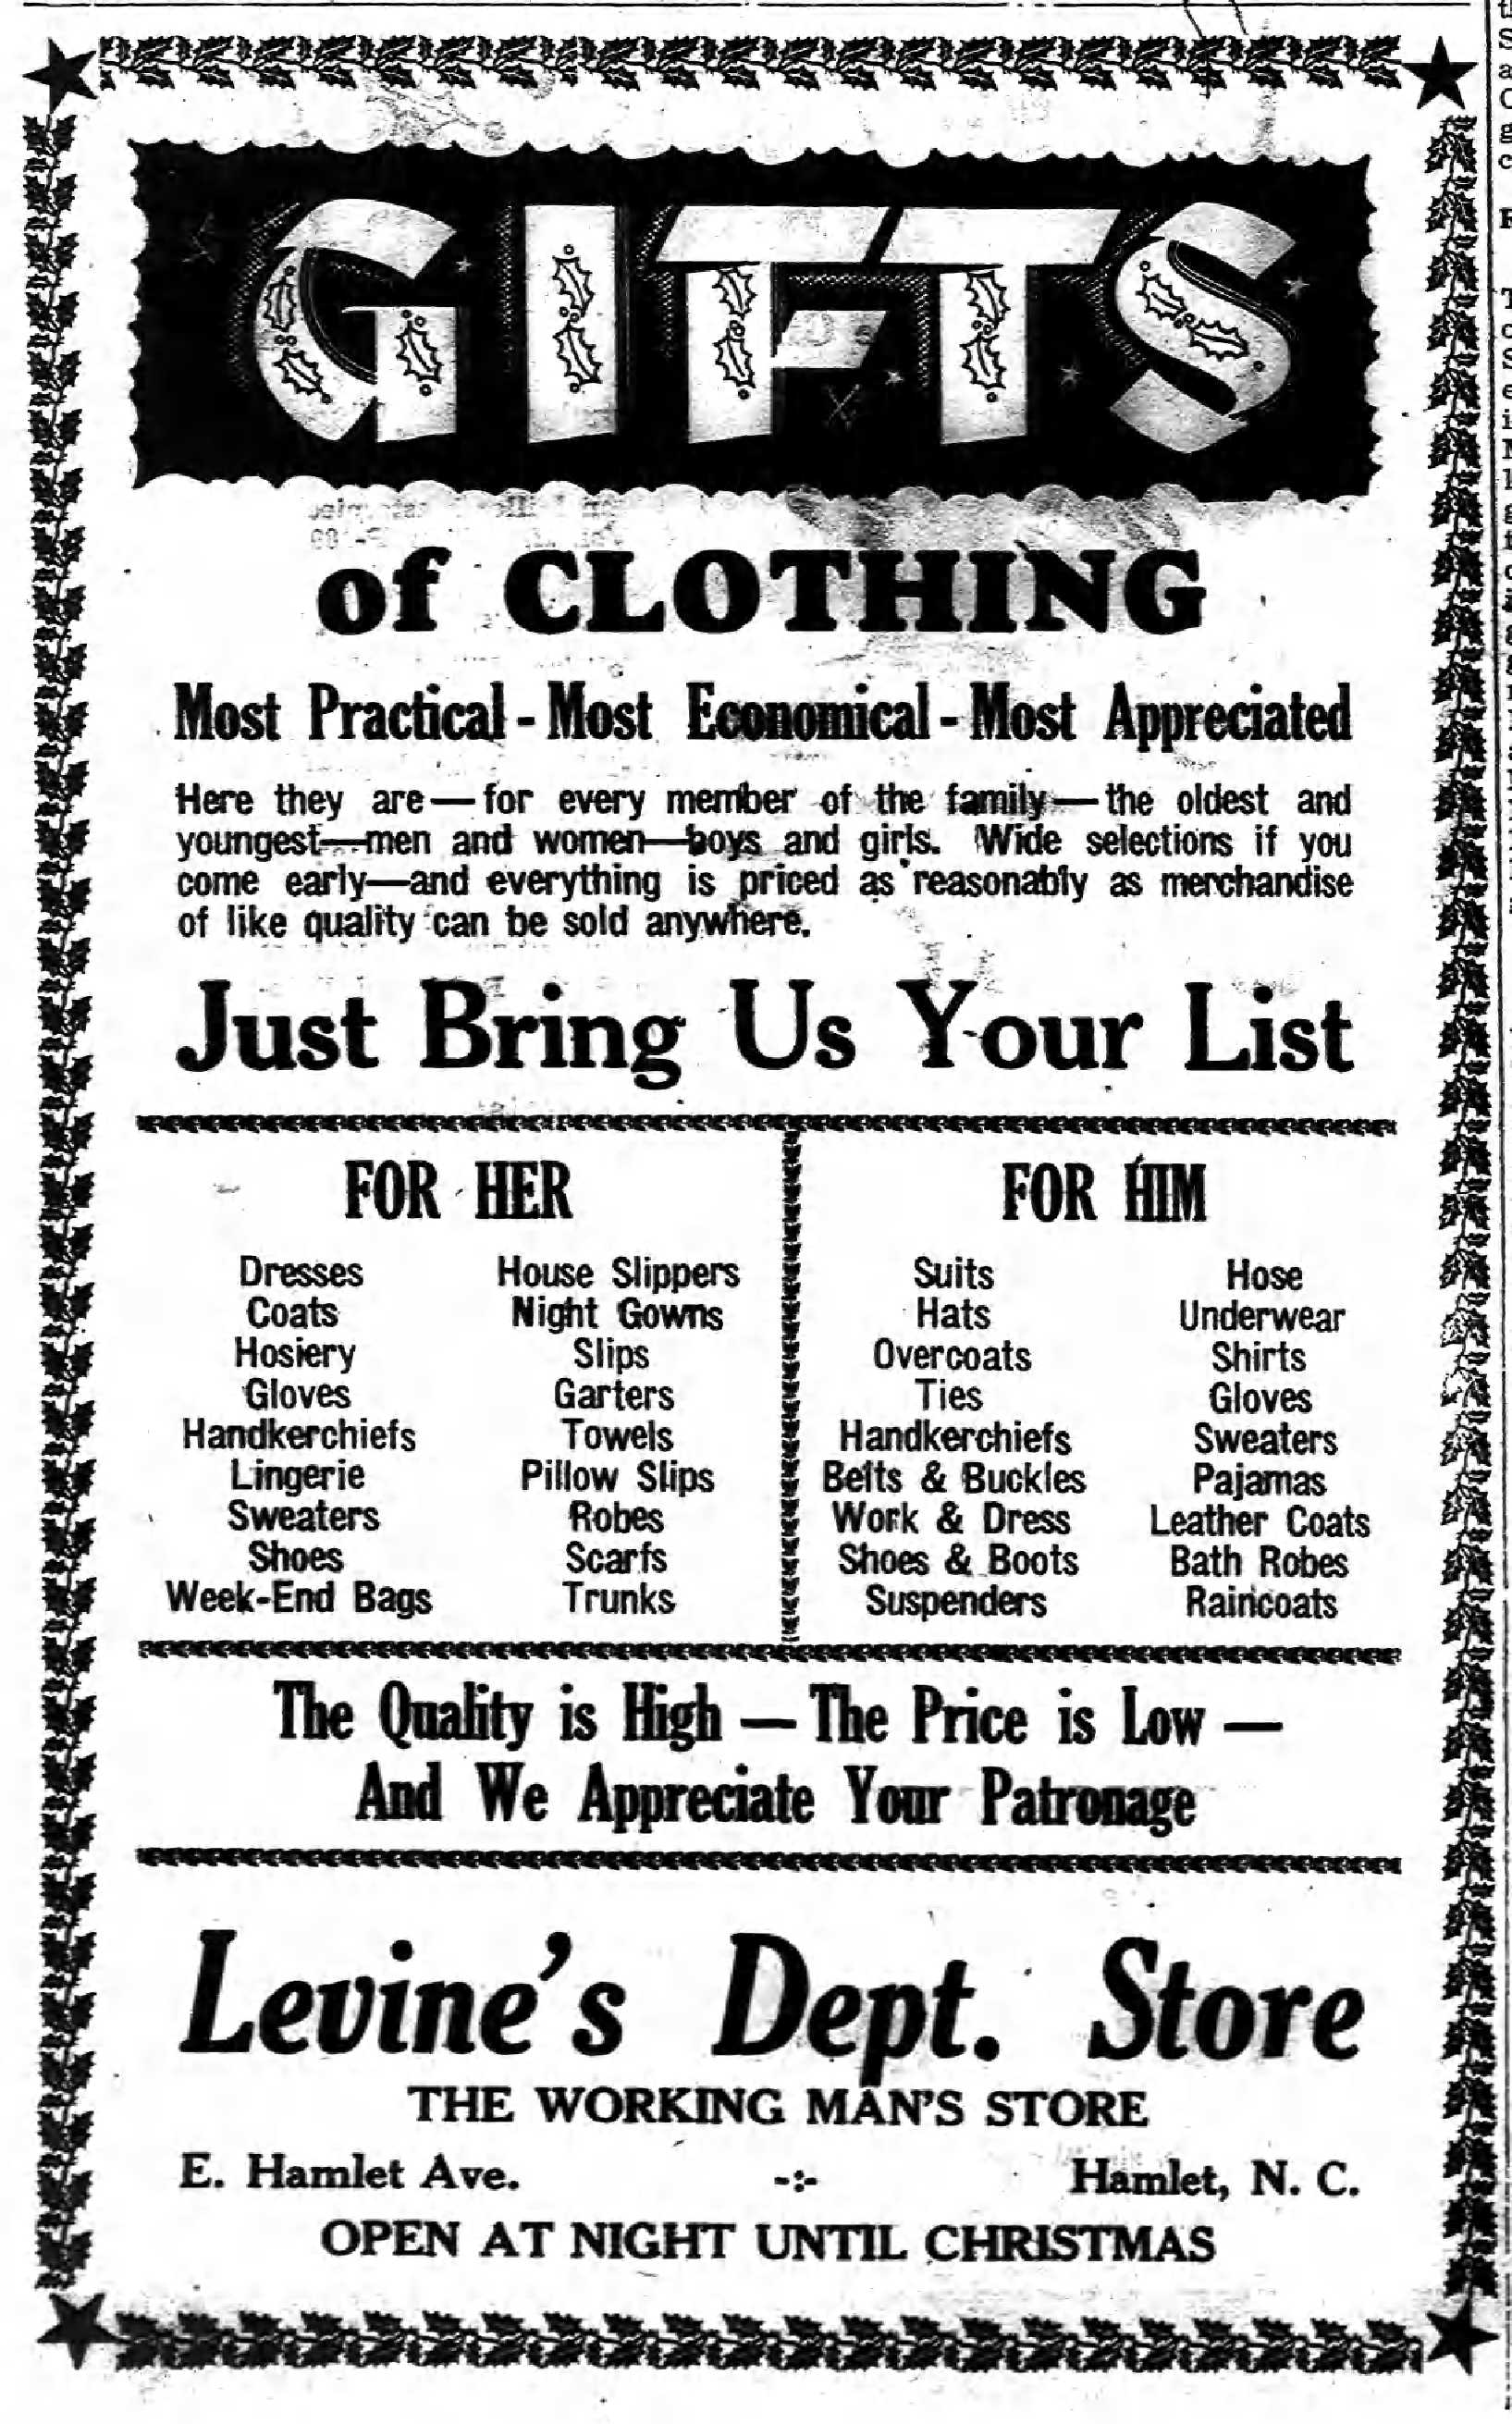 1947 Levine's Dept Store.jpg